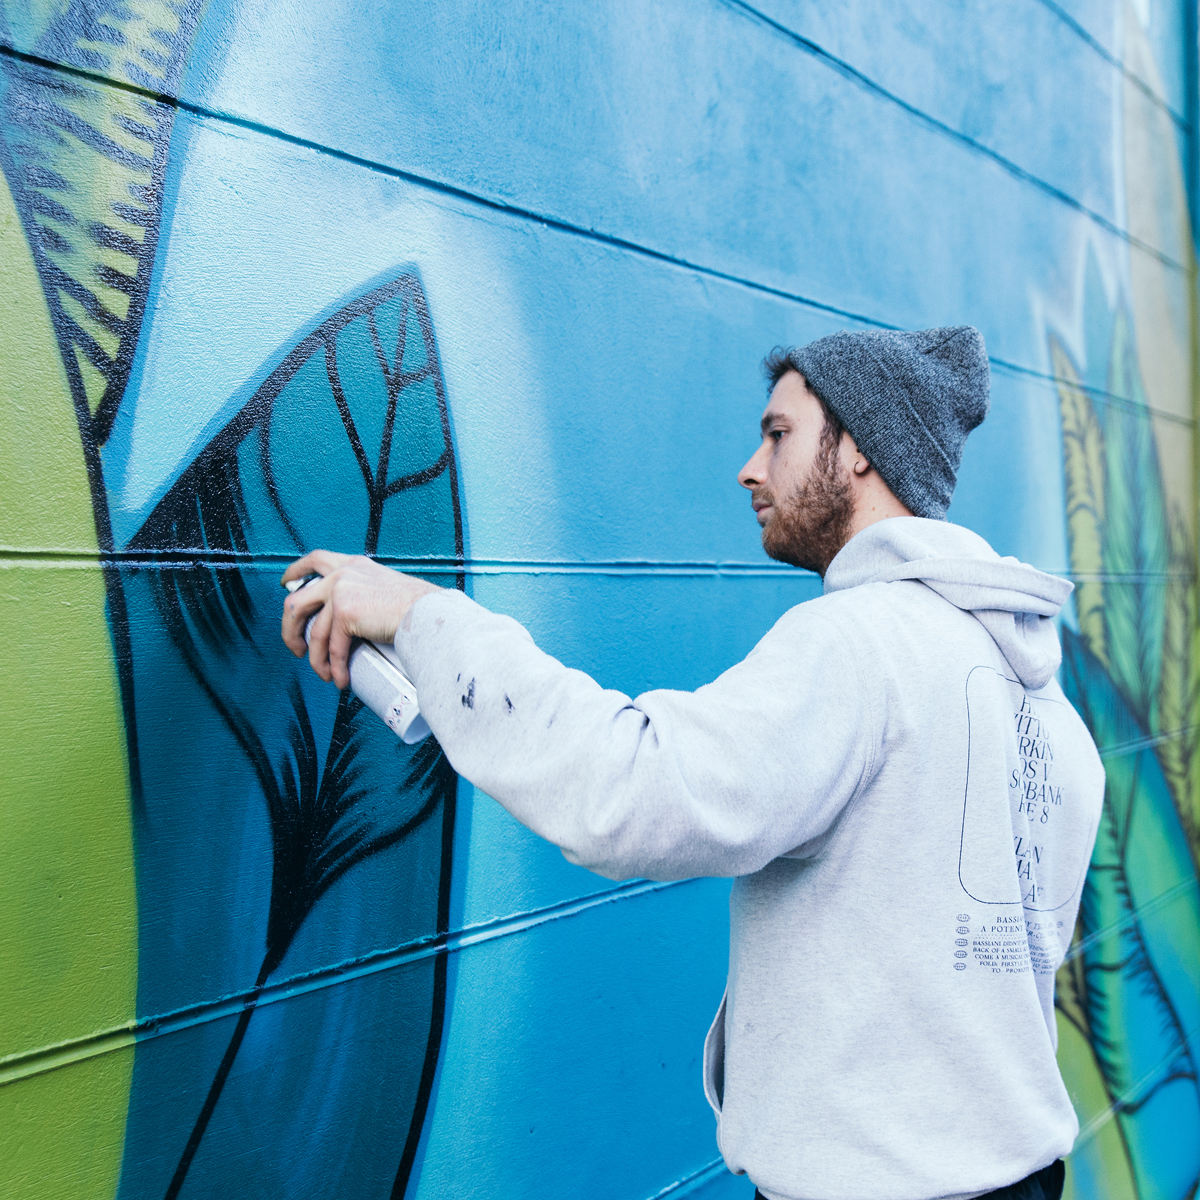 Daniel Rupaszov painting a mural